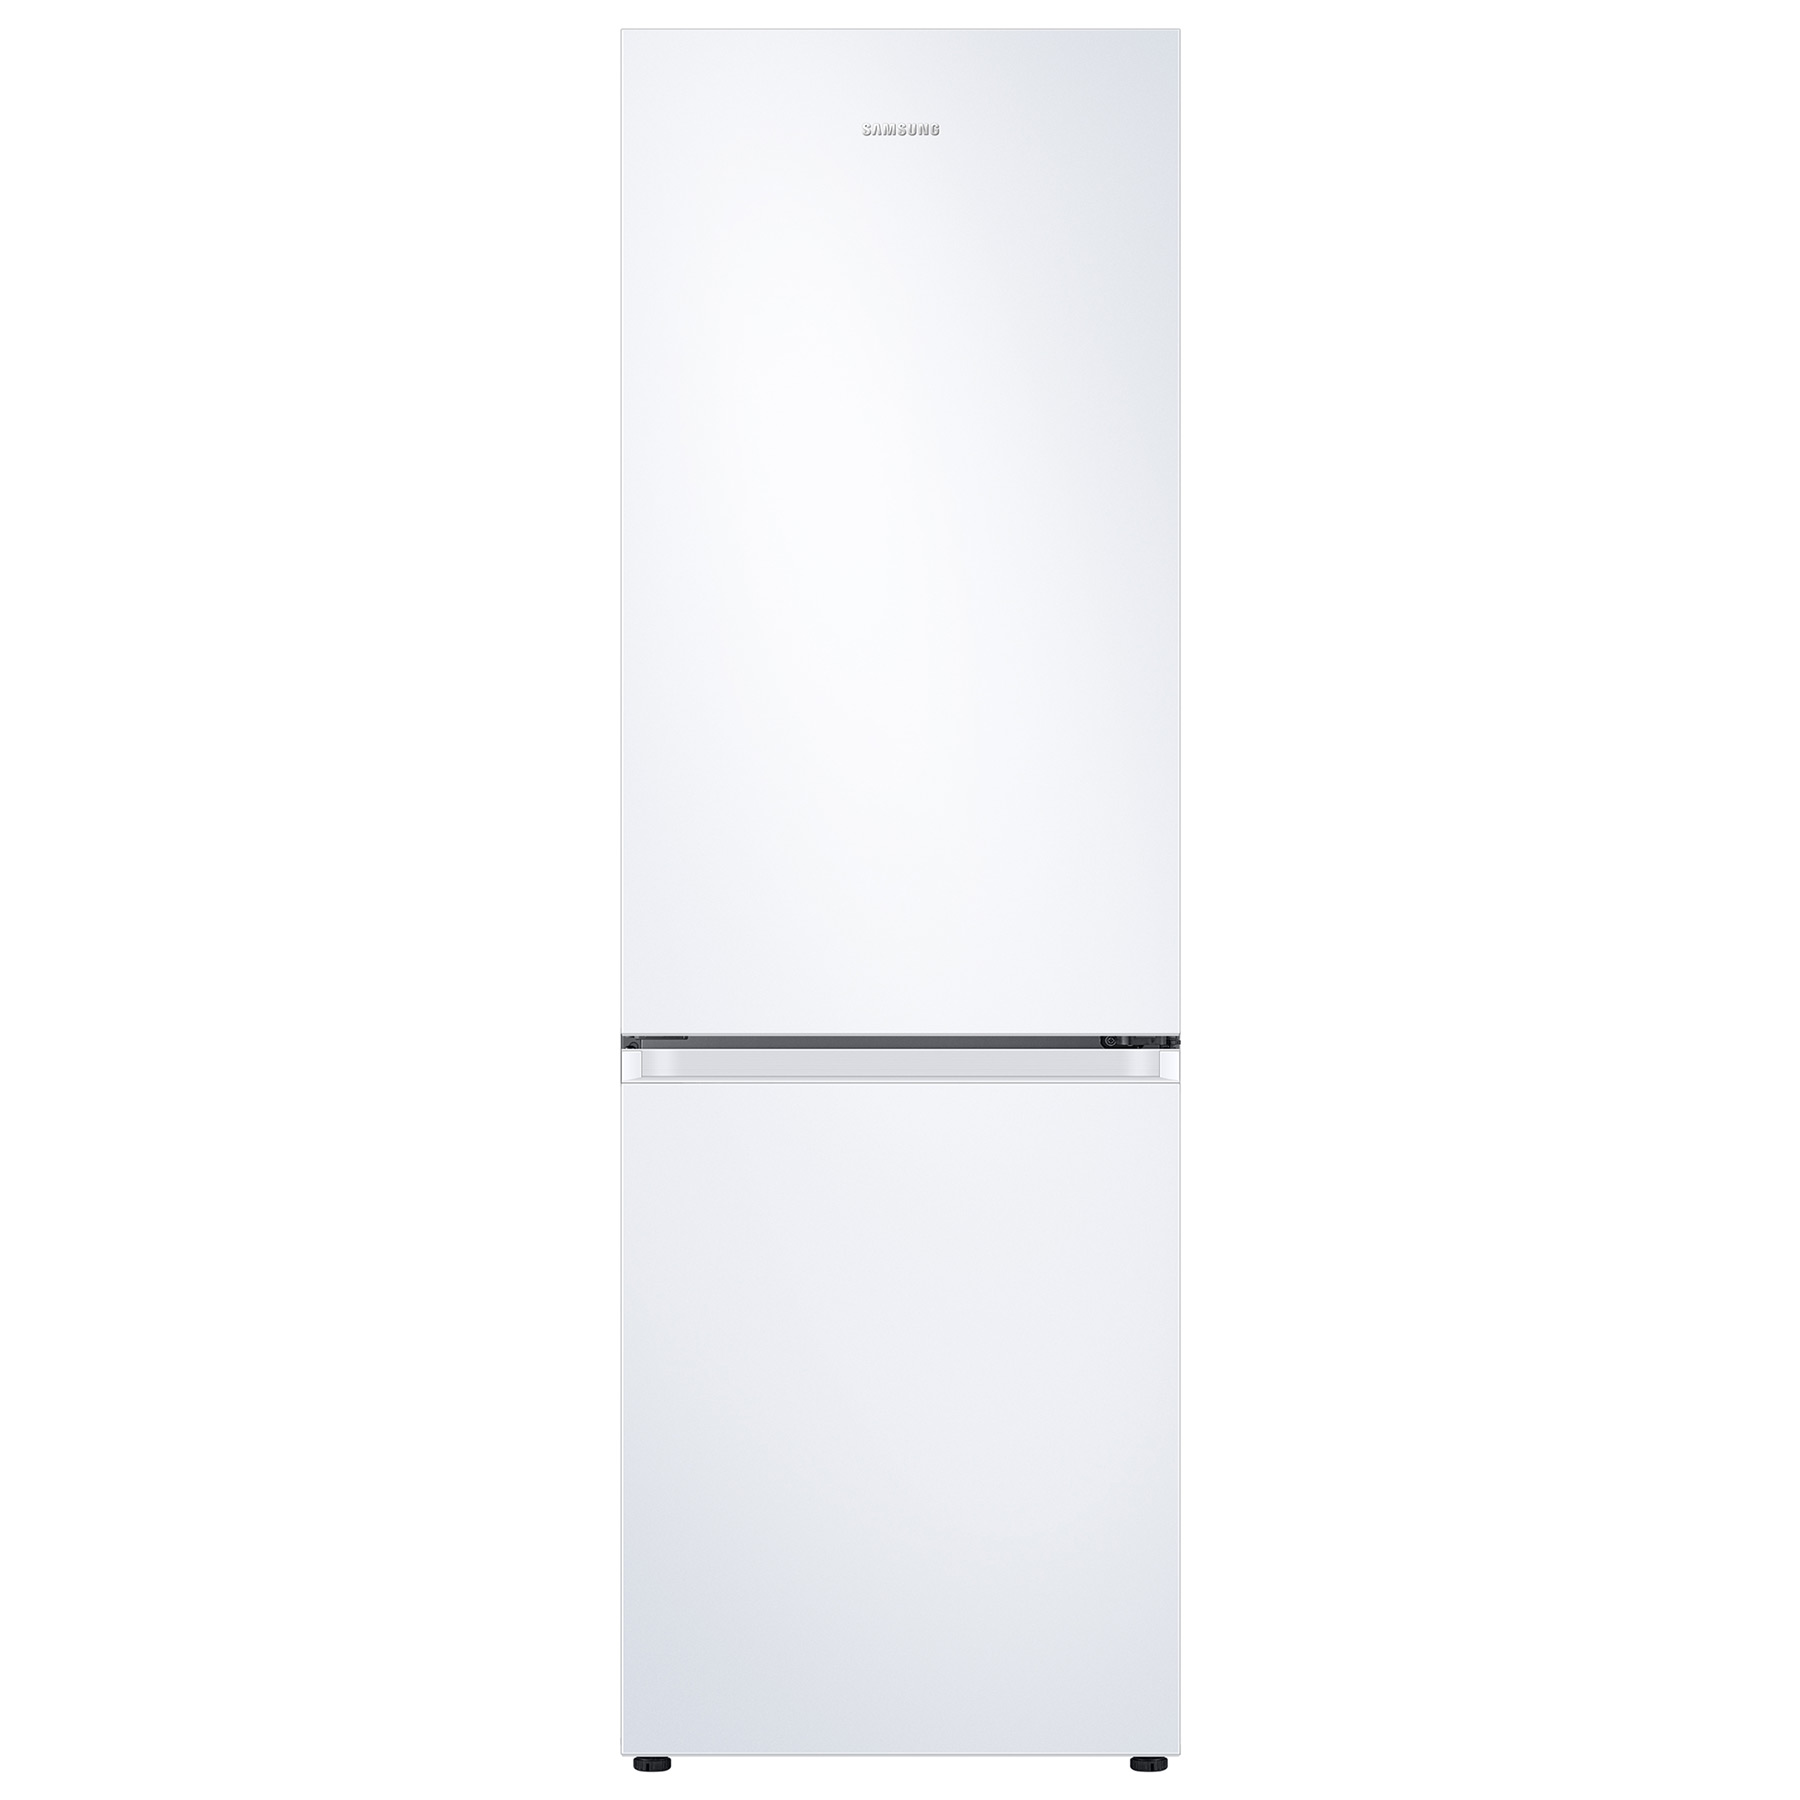 Image of Samsung RB34T602EWW 60cm Frost Free Fridge Freezer in White 1 83m E